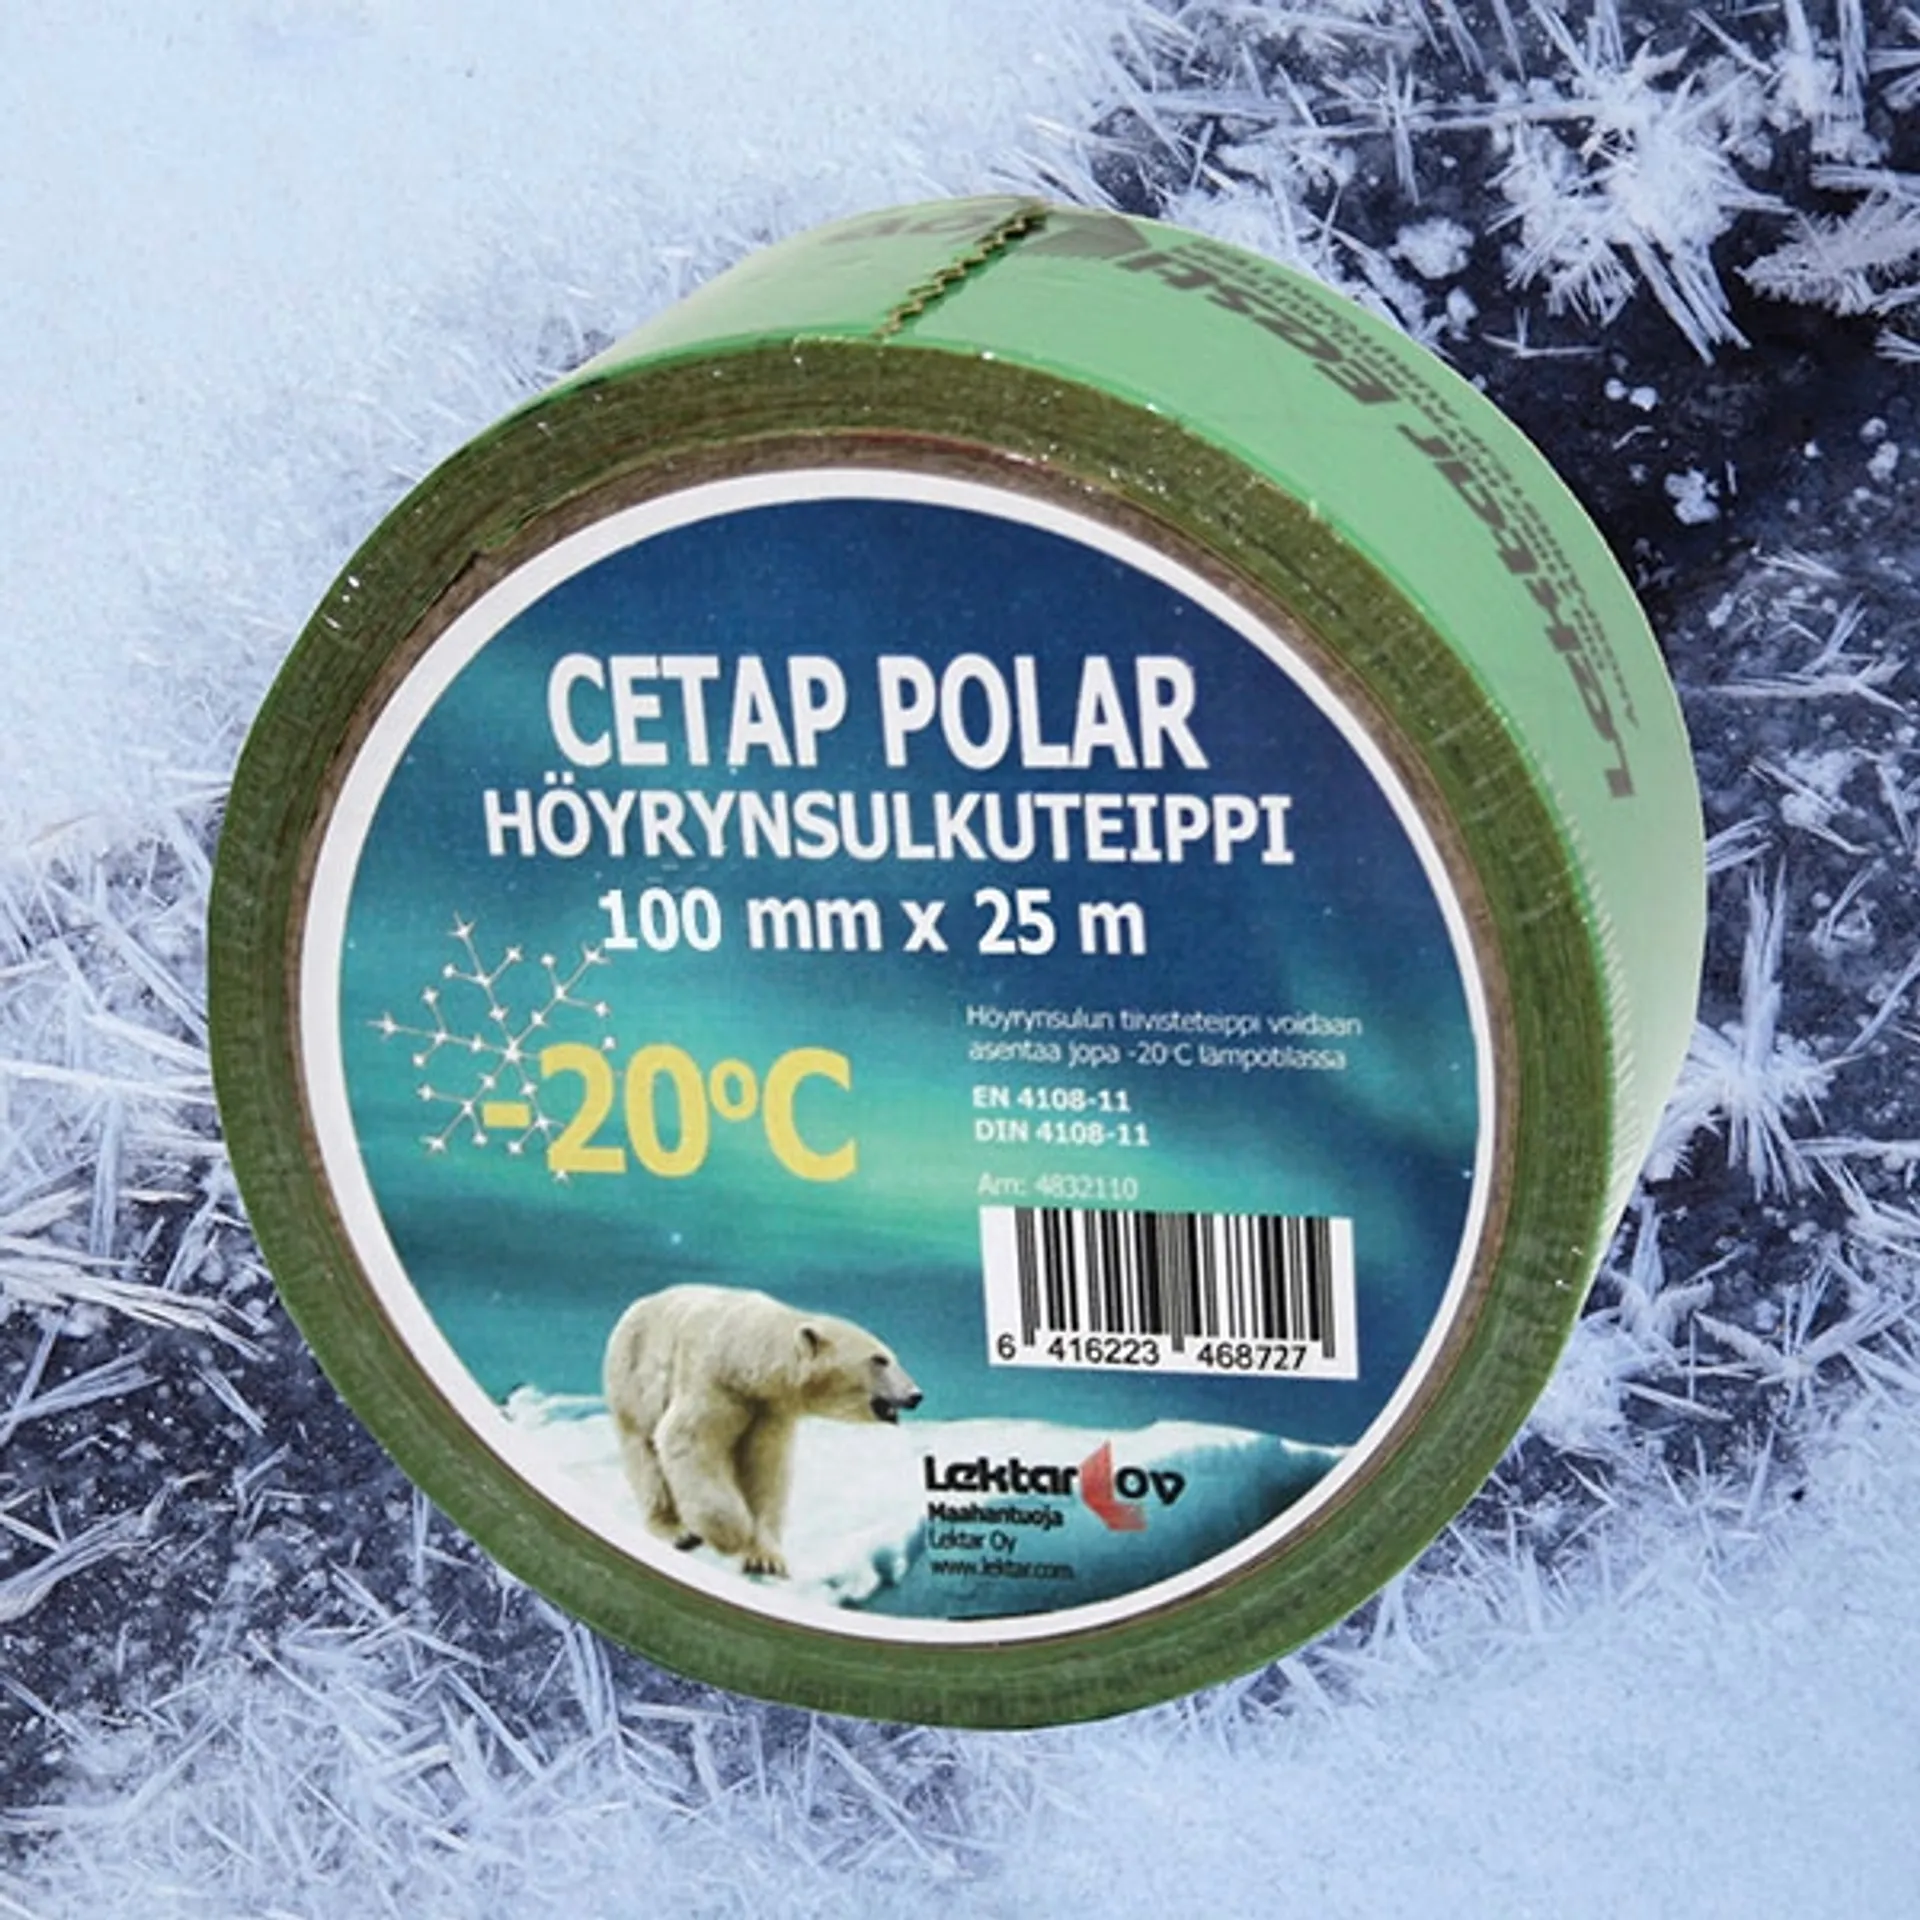 Cetap Polar höyrynsulkuteippi -20c 100 mm x 25 m